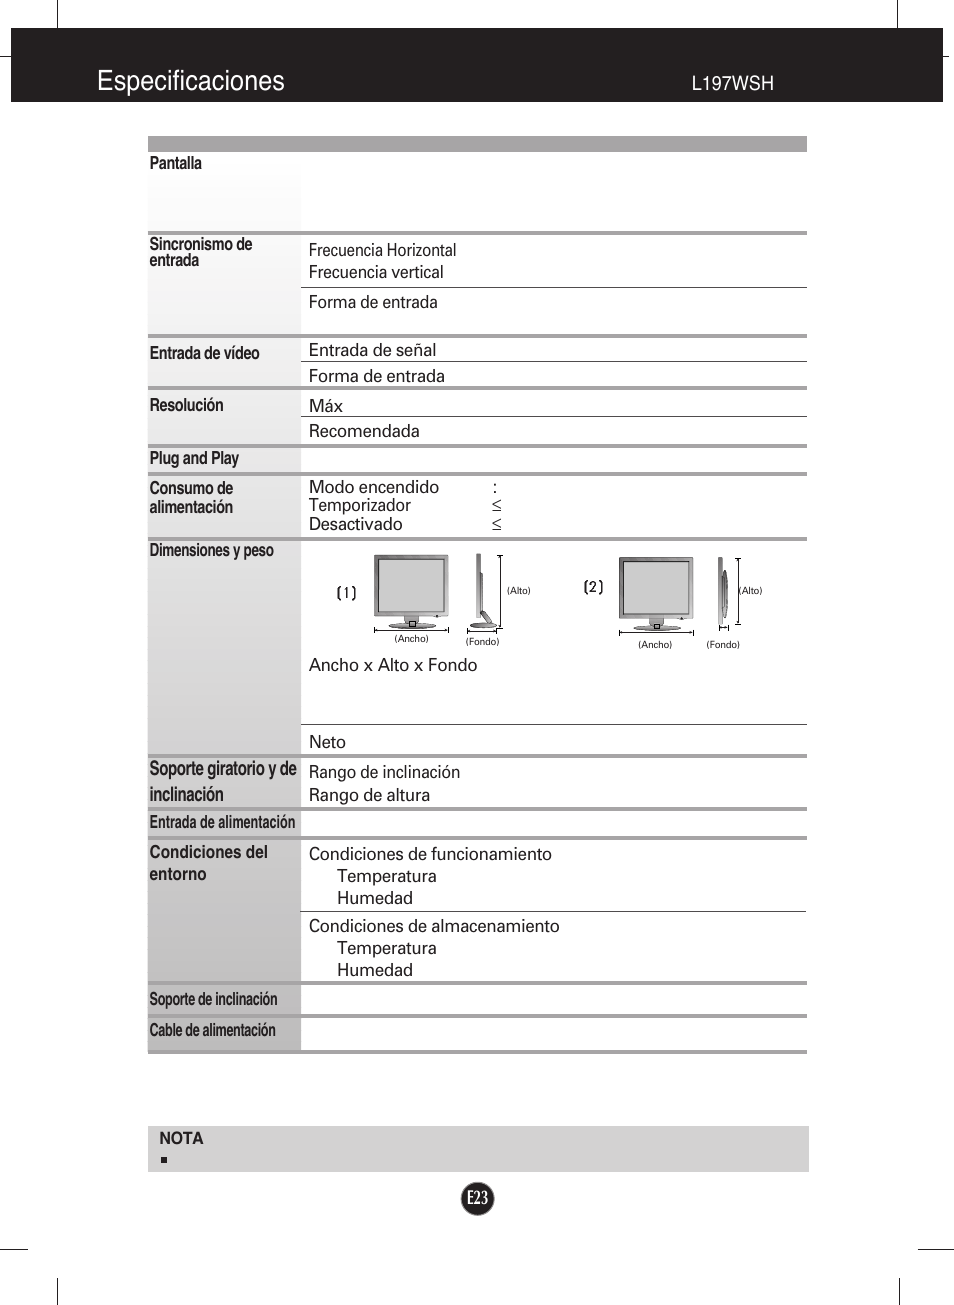 Especificaciones | LG L197WH-PF Manual del usuario | Página 24 / 29